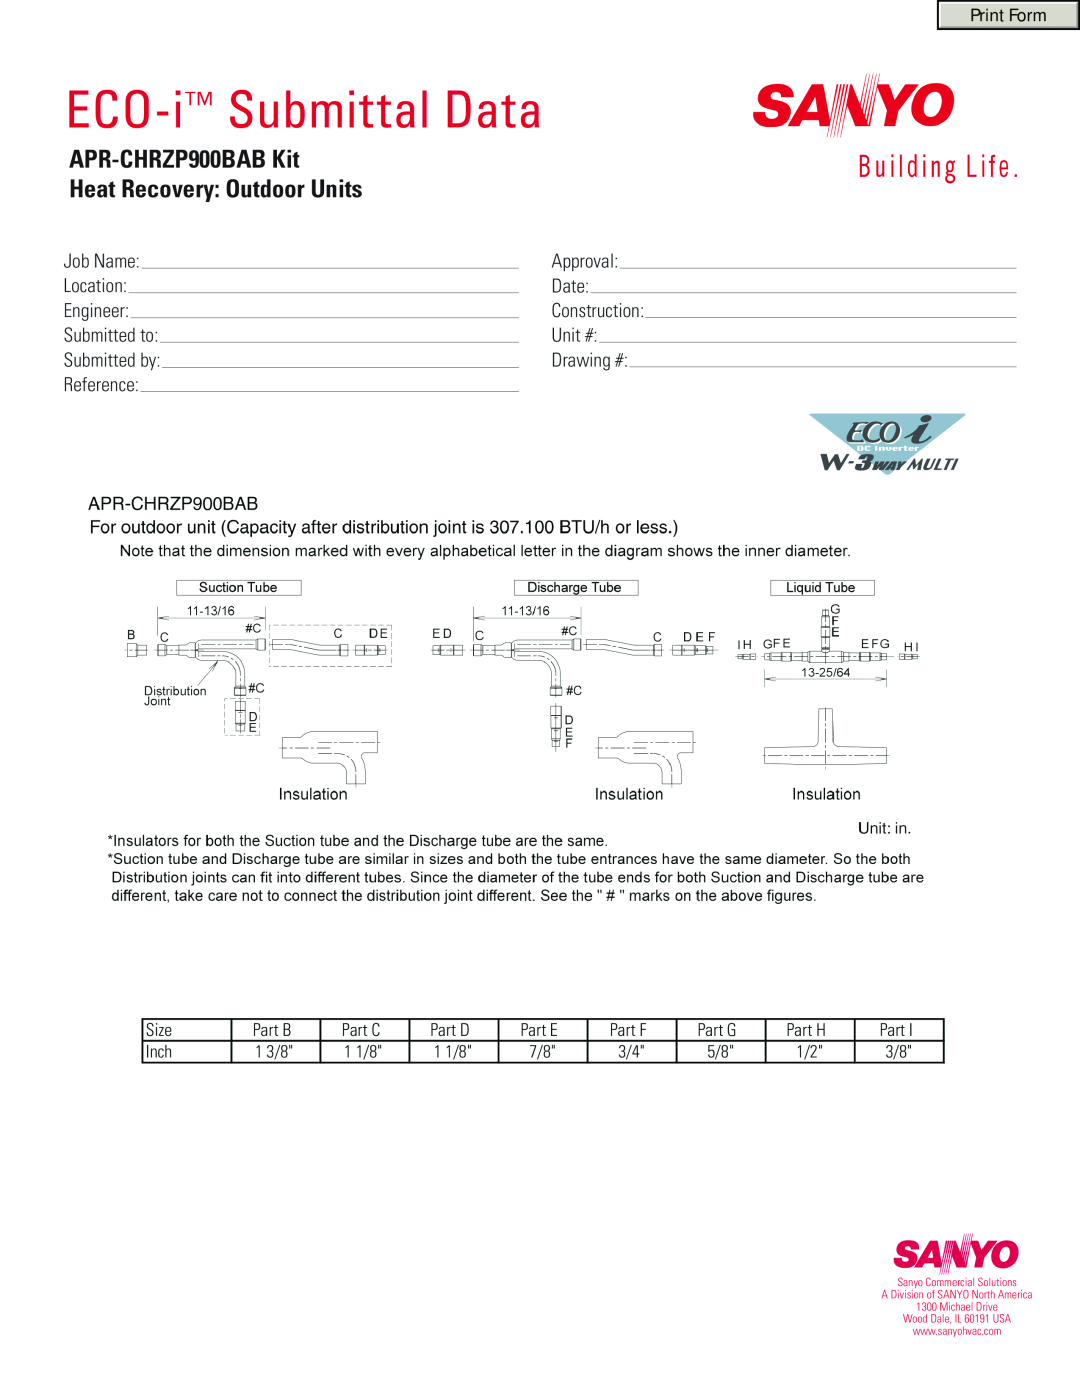 Sanyo APR-CHRZP900BAB Kit manual ECO-i Submittal Data, APR-CHRZP900BABKit Heat Recovery Outdoor Units 